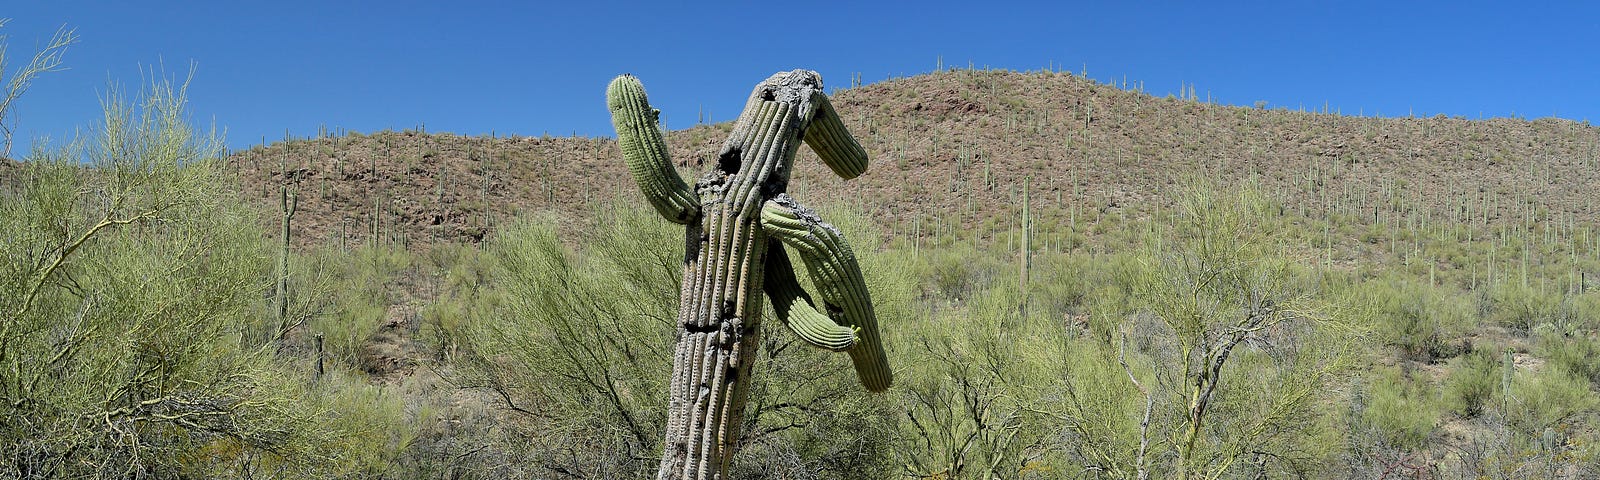 Old saguaro cactus in southern Arizona Sonoran Desert By John Wijsman- Adobe Stock licensed